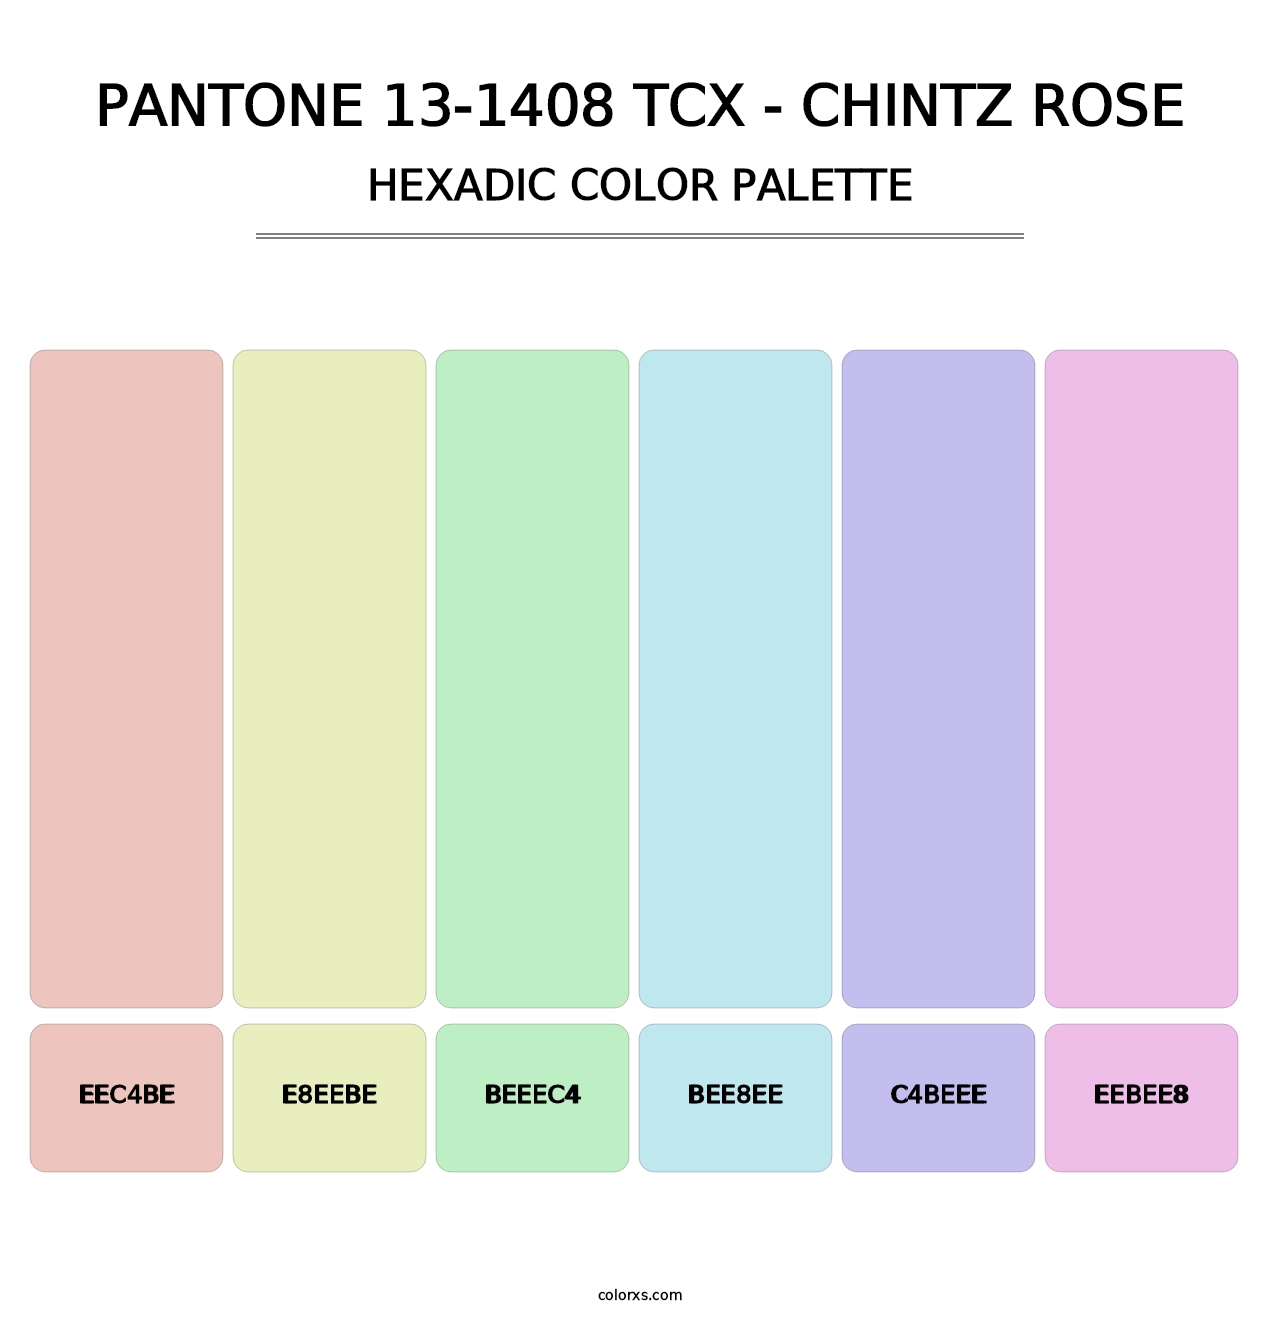 PANTONE 13-1408 TCX - Chintz Rose - Hexadic Color Palette